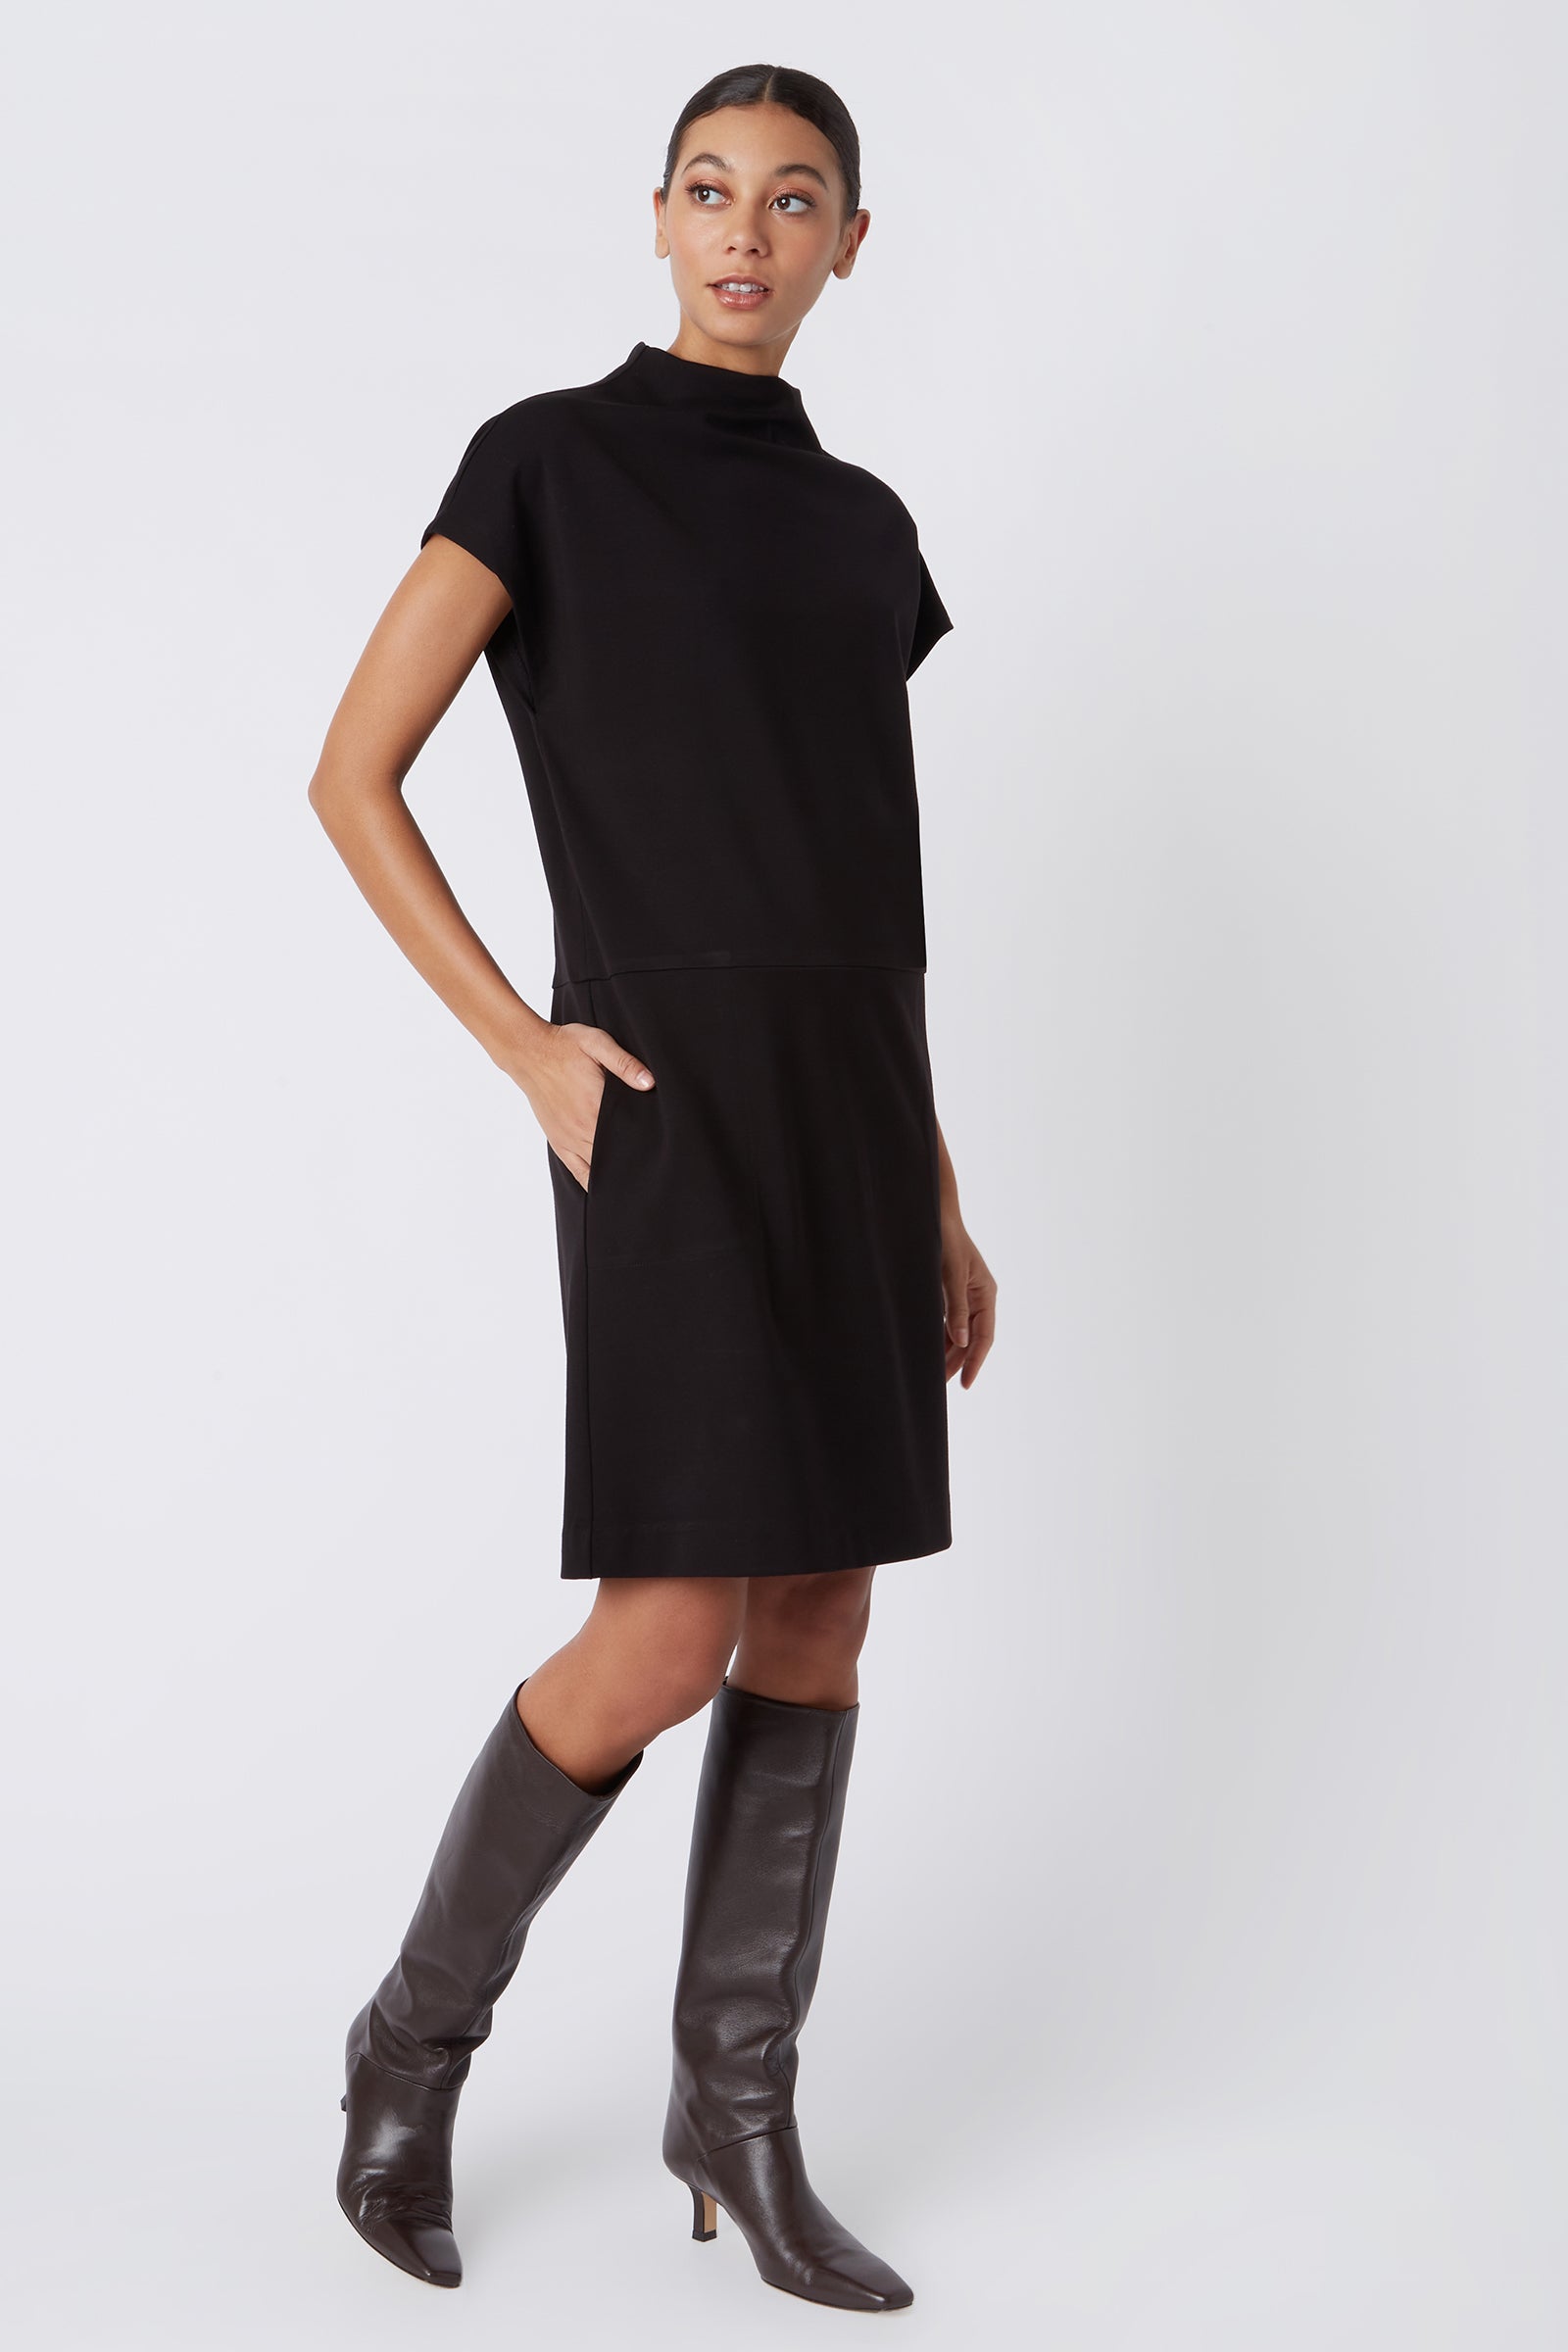 Kal Rieman Maya Funnel Dress in Black Ponte on Model Walking with Hand in Pocket Full Front Side View